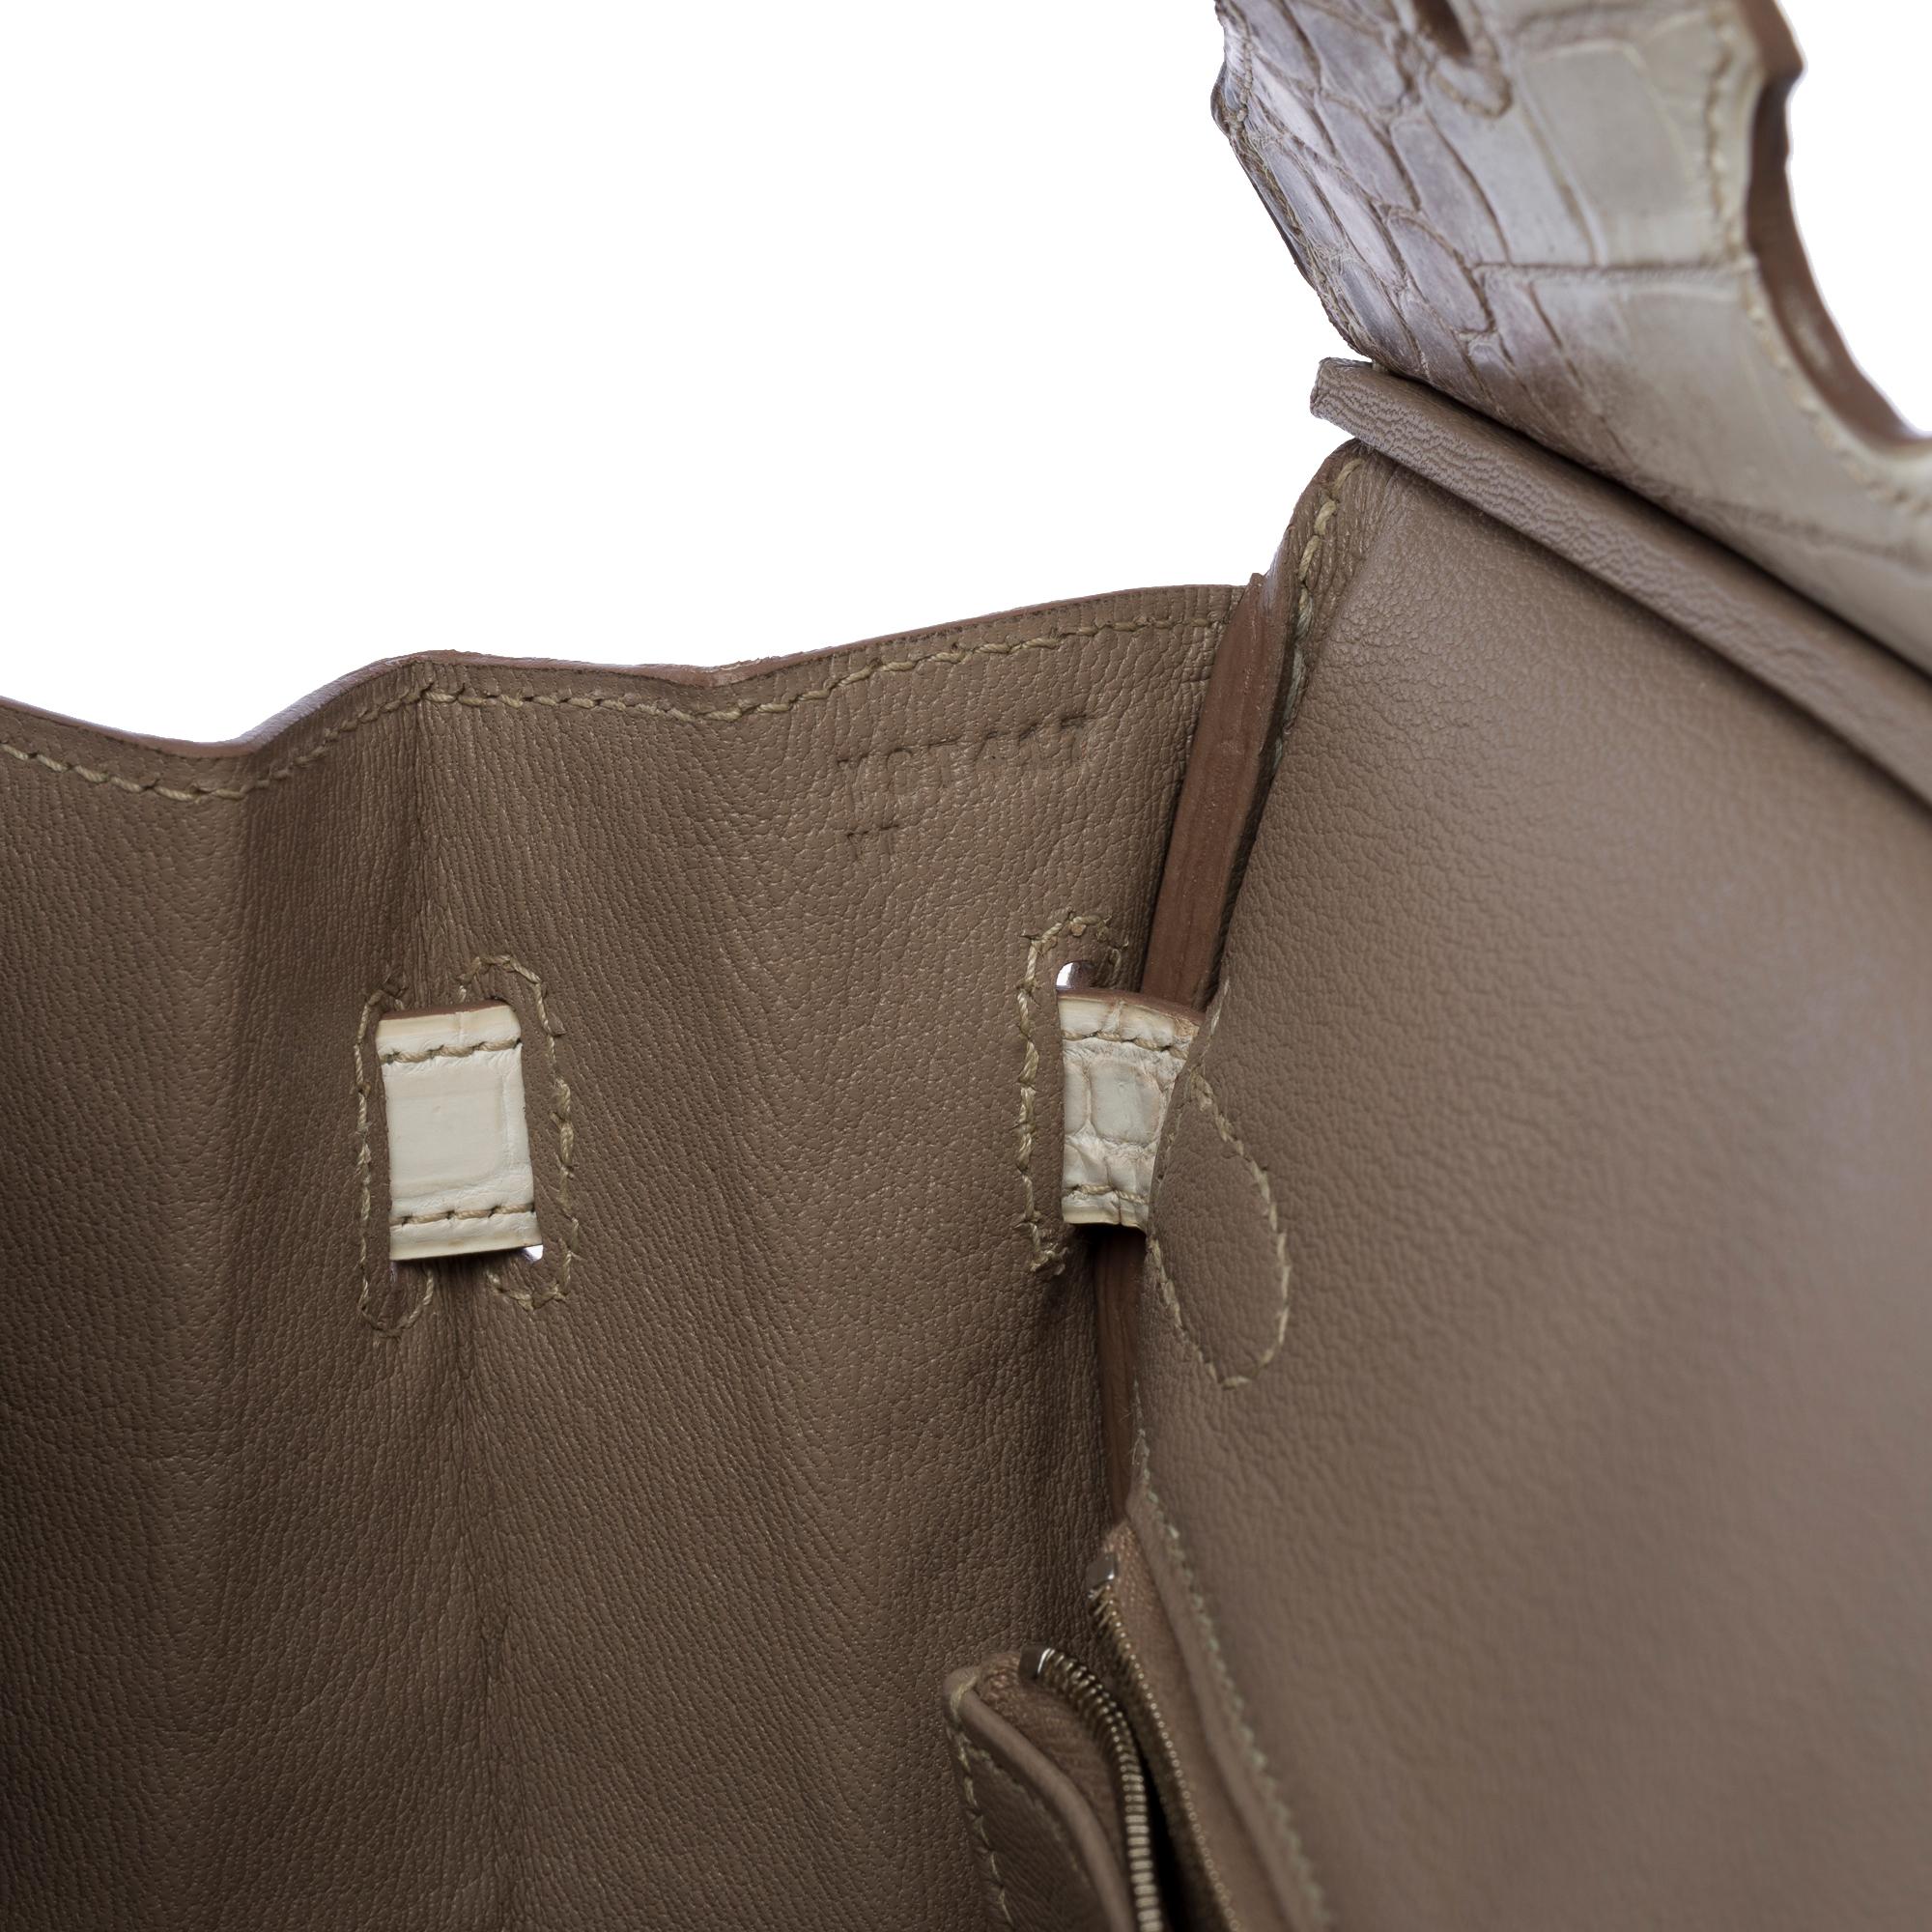 Rare New Hermès Birkin 30 Himalaya handbag in white Nile Crocodile leather, SHW 1